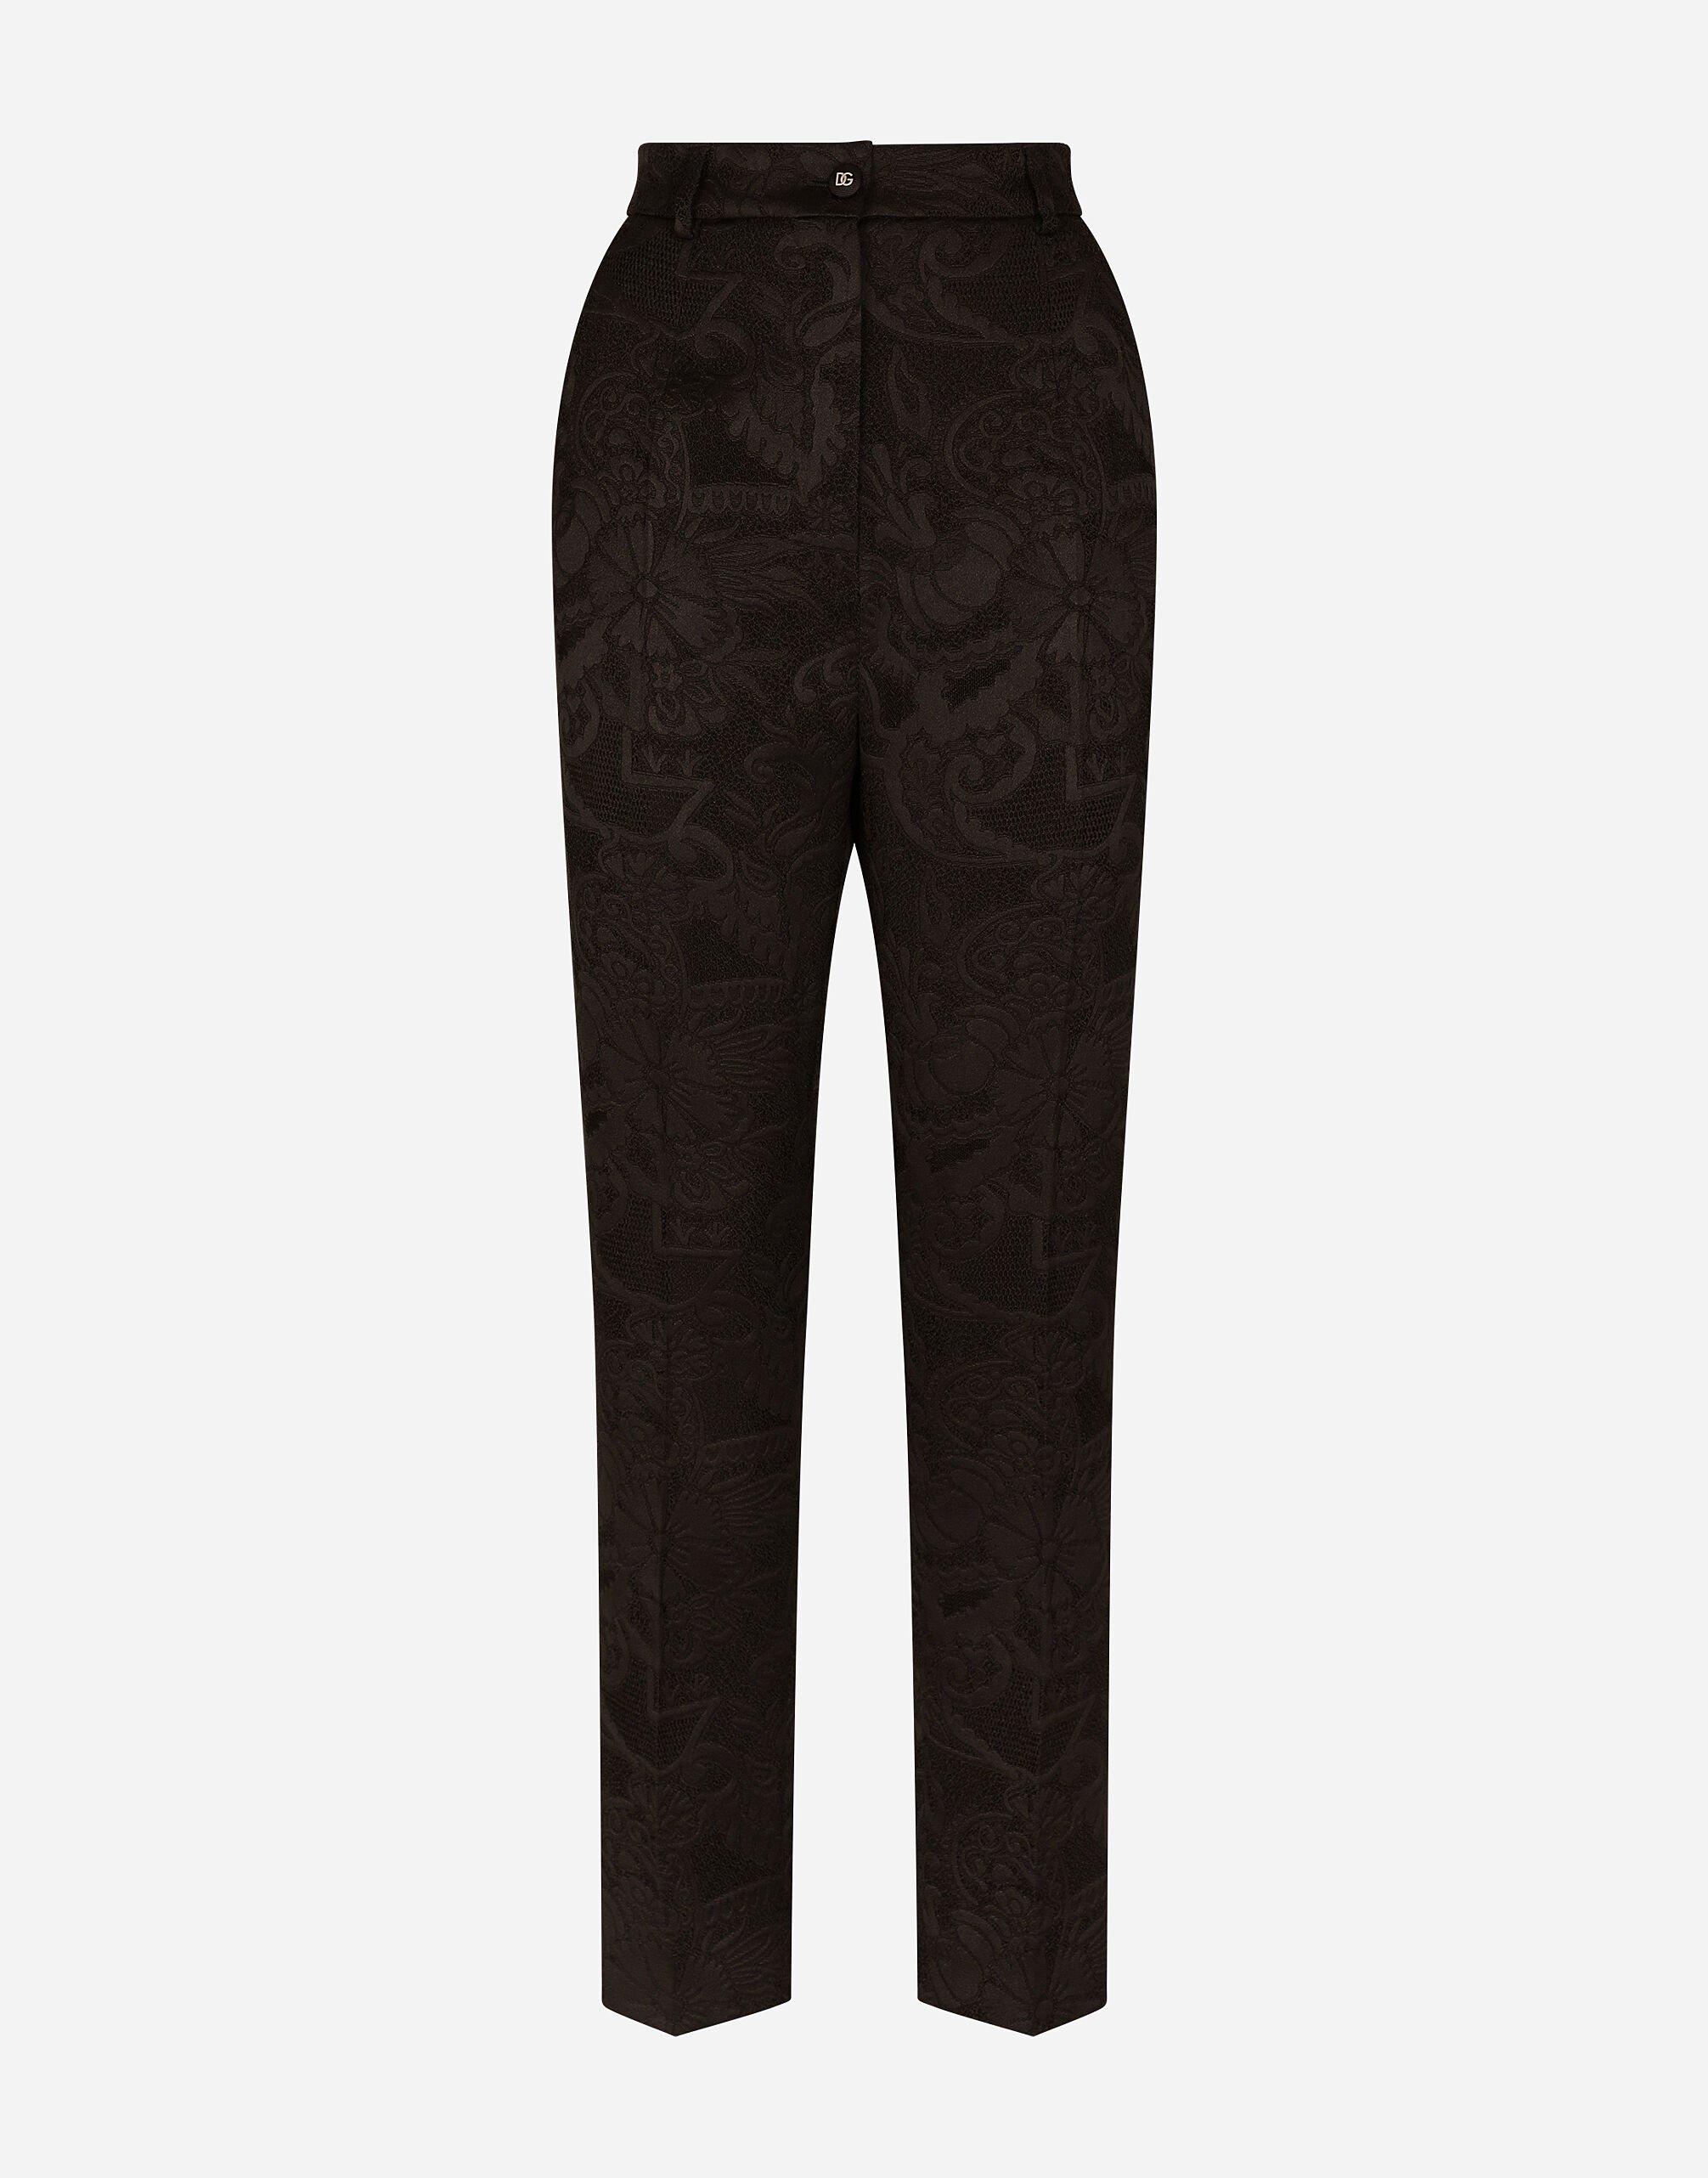 Dolce & Gabbana Floral jacquard pants Black F26R2TOUADW